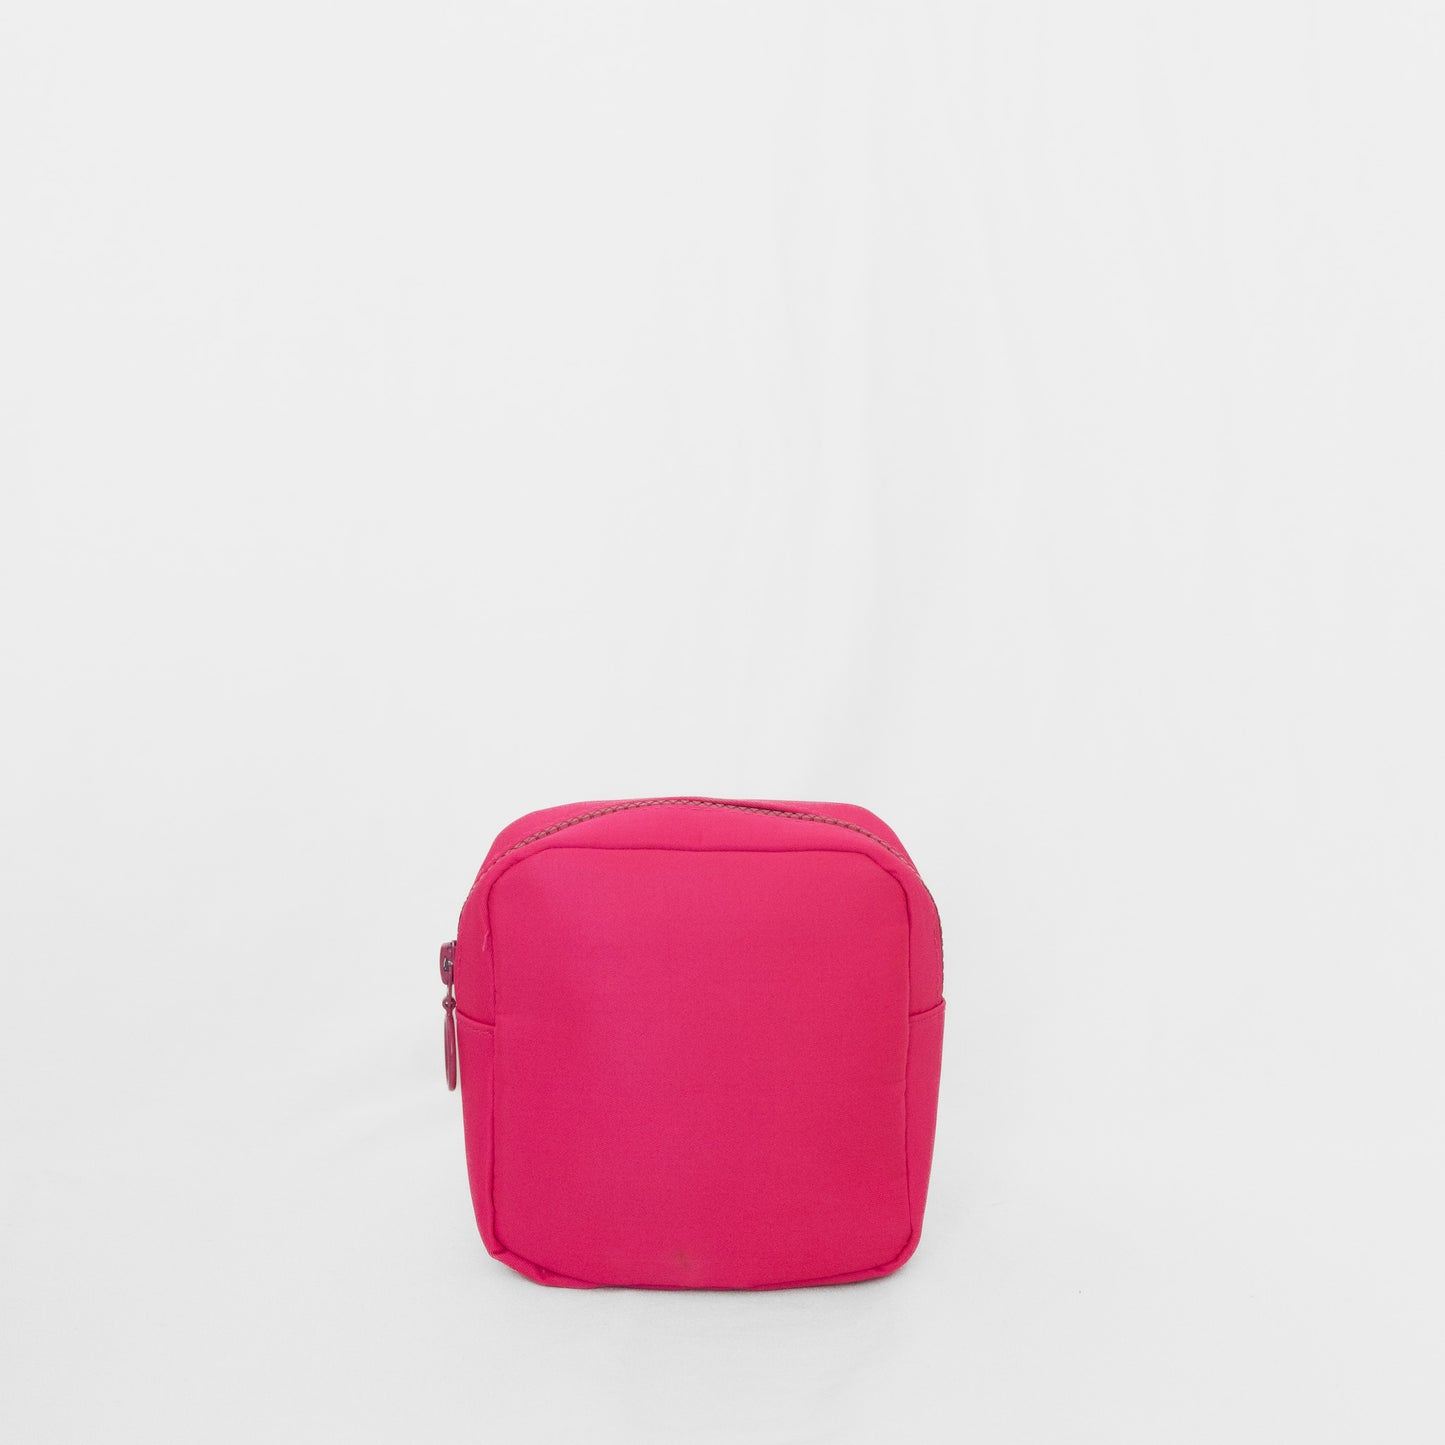 GW Essentials Nylon Pouch - Neon Pink - Give Wink